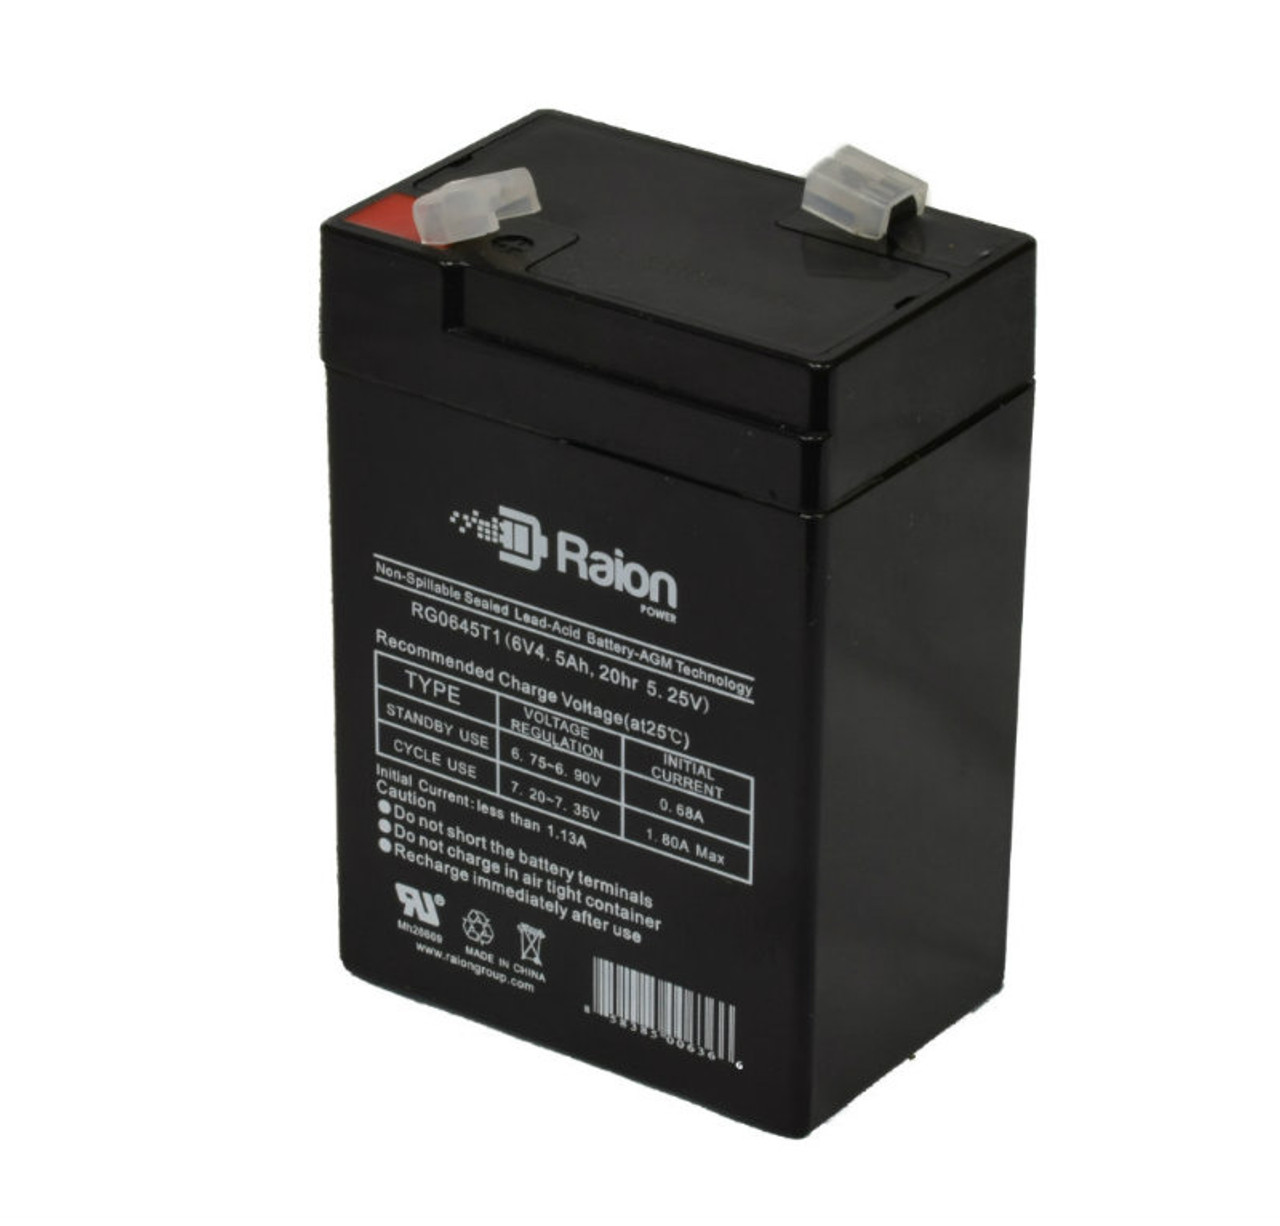 Raion Power RG0645T1 6V 4.5Ah Replacement Battery Cartridge for Sonnenschein M126